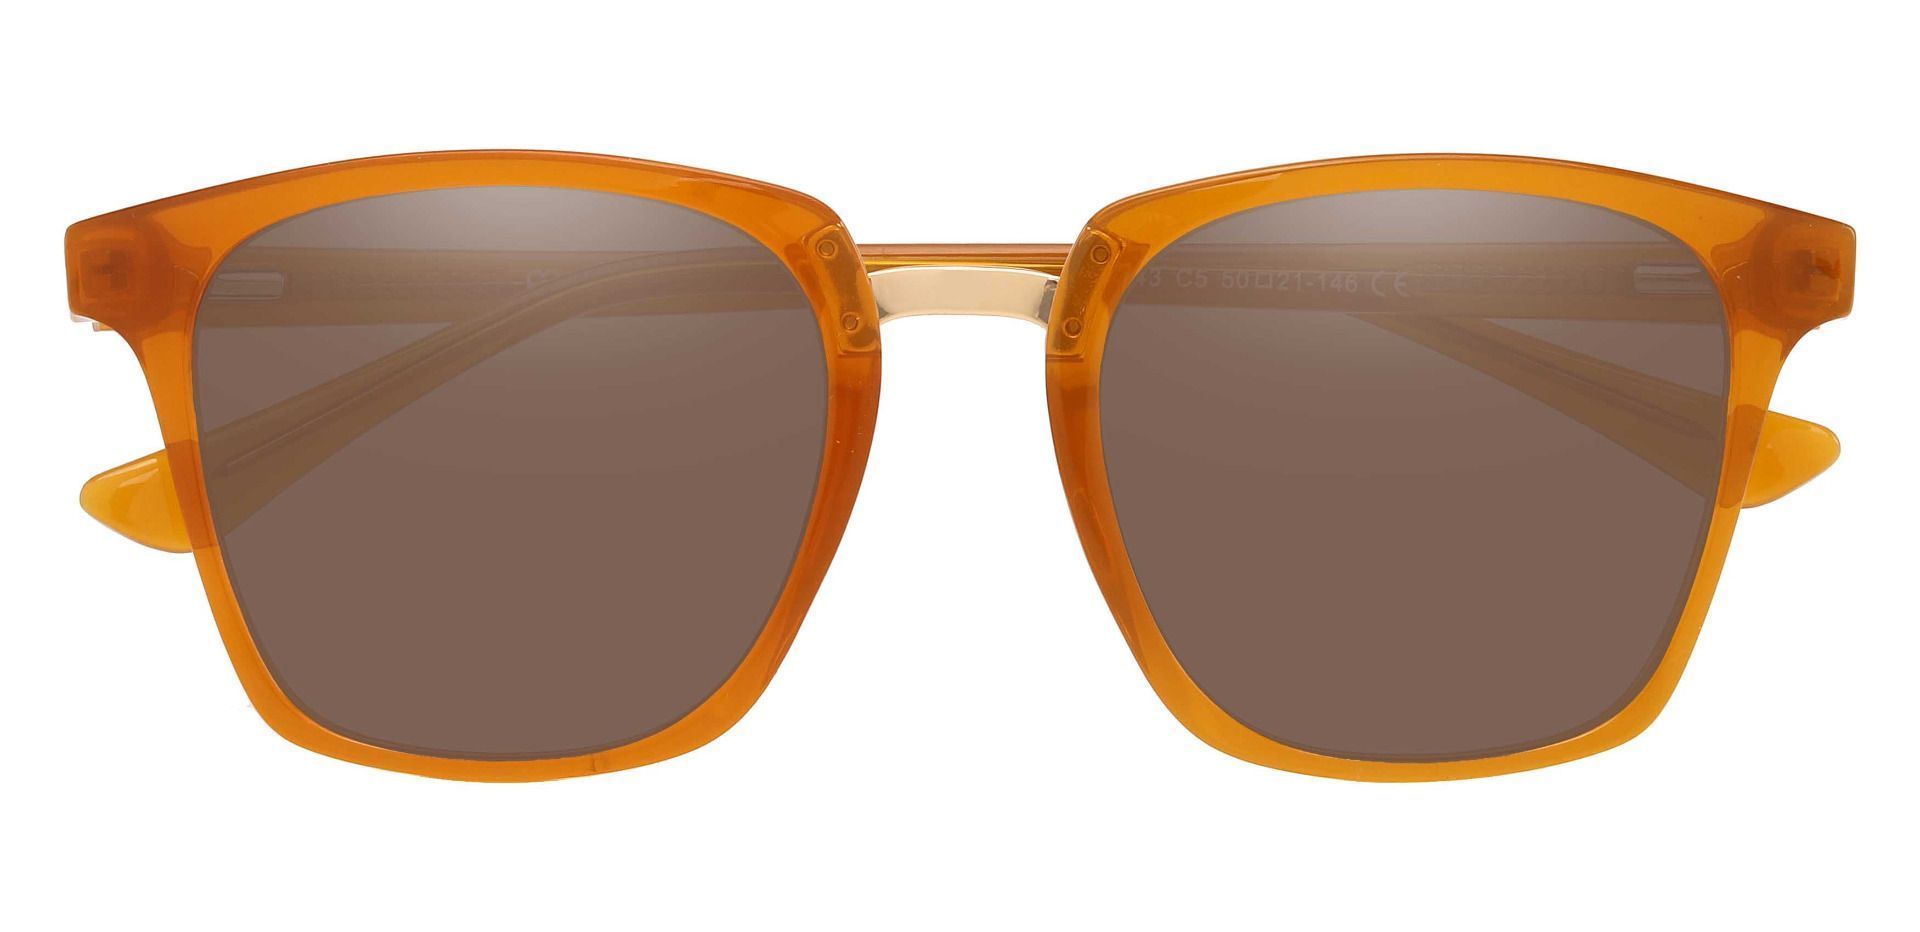 Delta Square Reading Sunglasses - Orange Frame With Brown Lenses